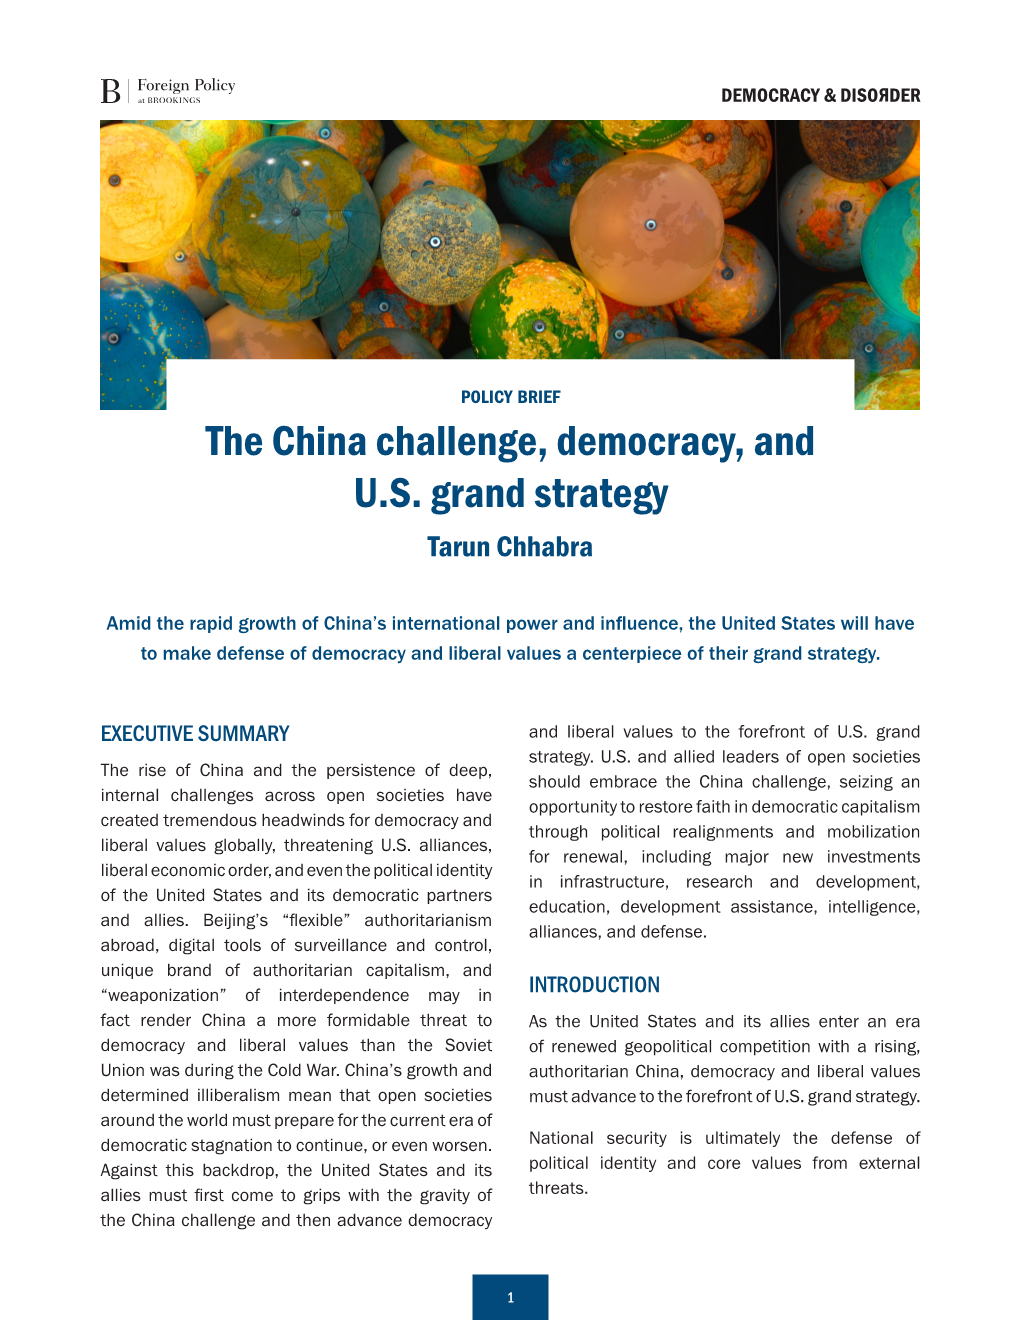 The China Challenge, Democracy, and U.S. Grand Strategy Tarun Chhabra